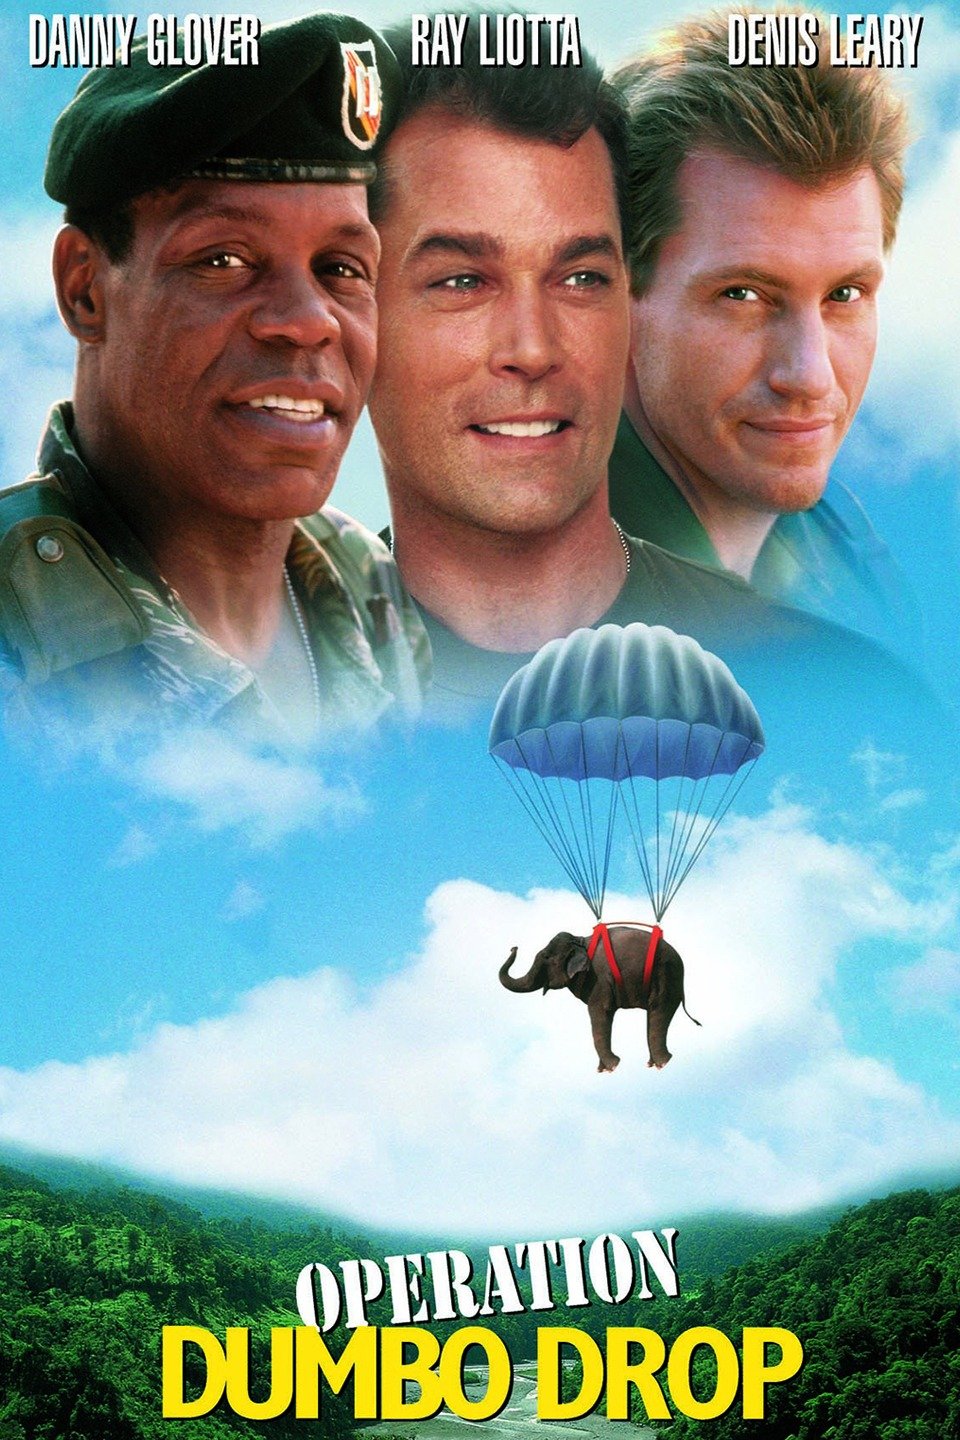 [MINI-HD] Operation Dumbo Drop (1995) ยุทธการช้างลอยฟ้า [1080p] [พากย์ไทย 2.0 + เสียงอังกฤษ DTS] [บรรยายอังกฤษ] [เสียงไทย + ซับ ENG] [OPENLOAD]